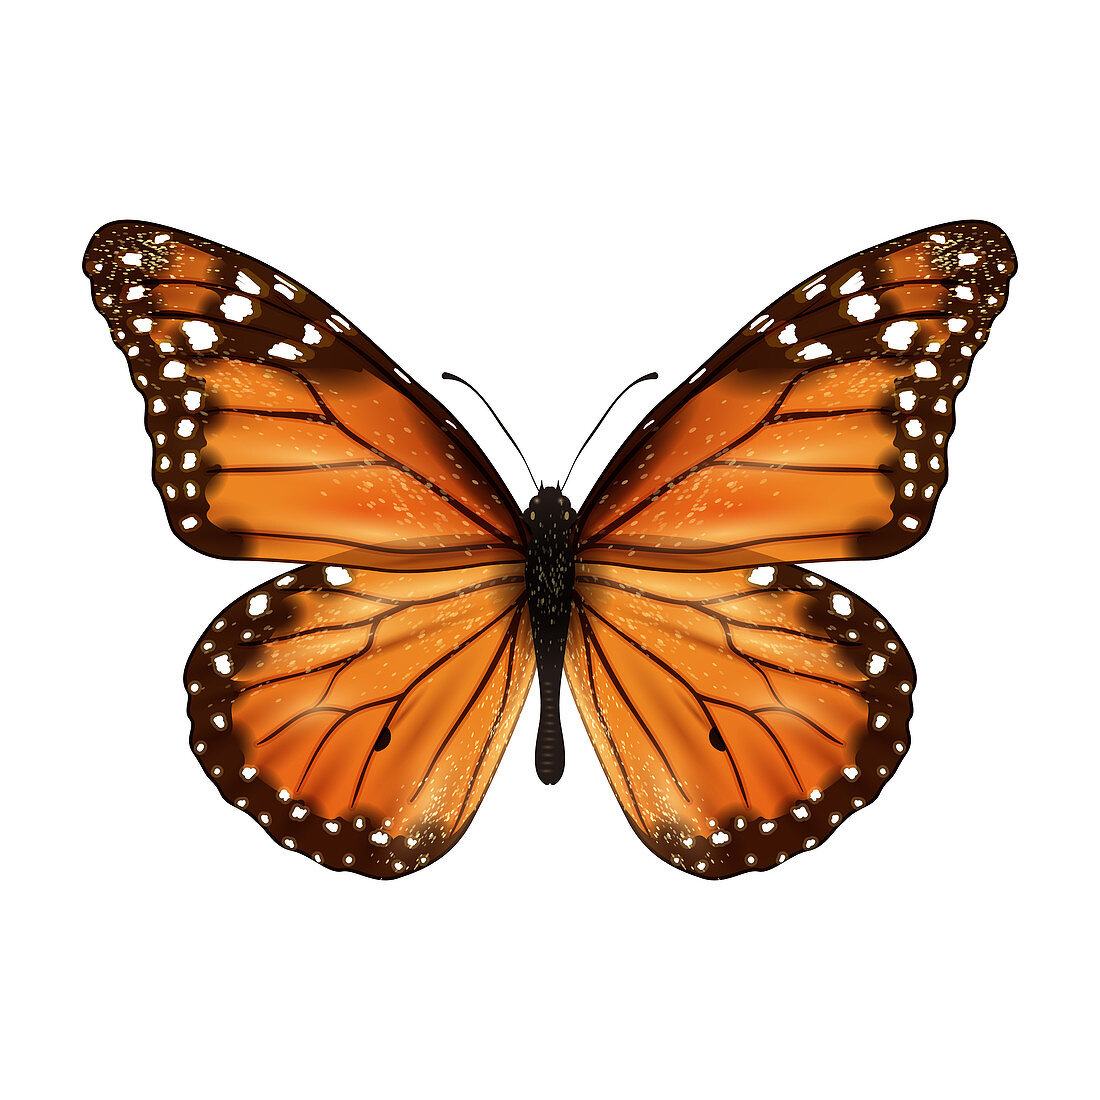 Butterfly, illustration